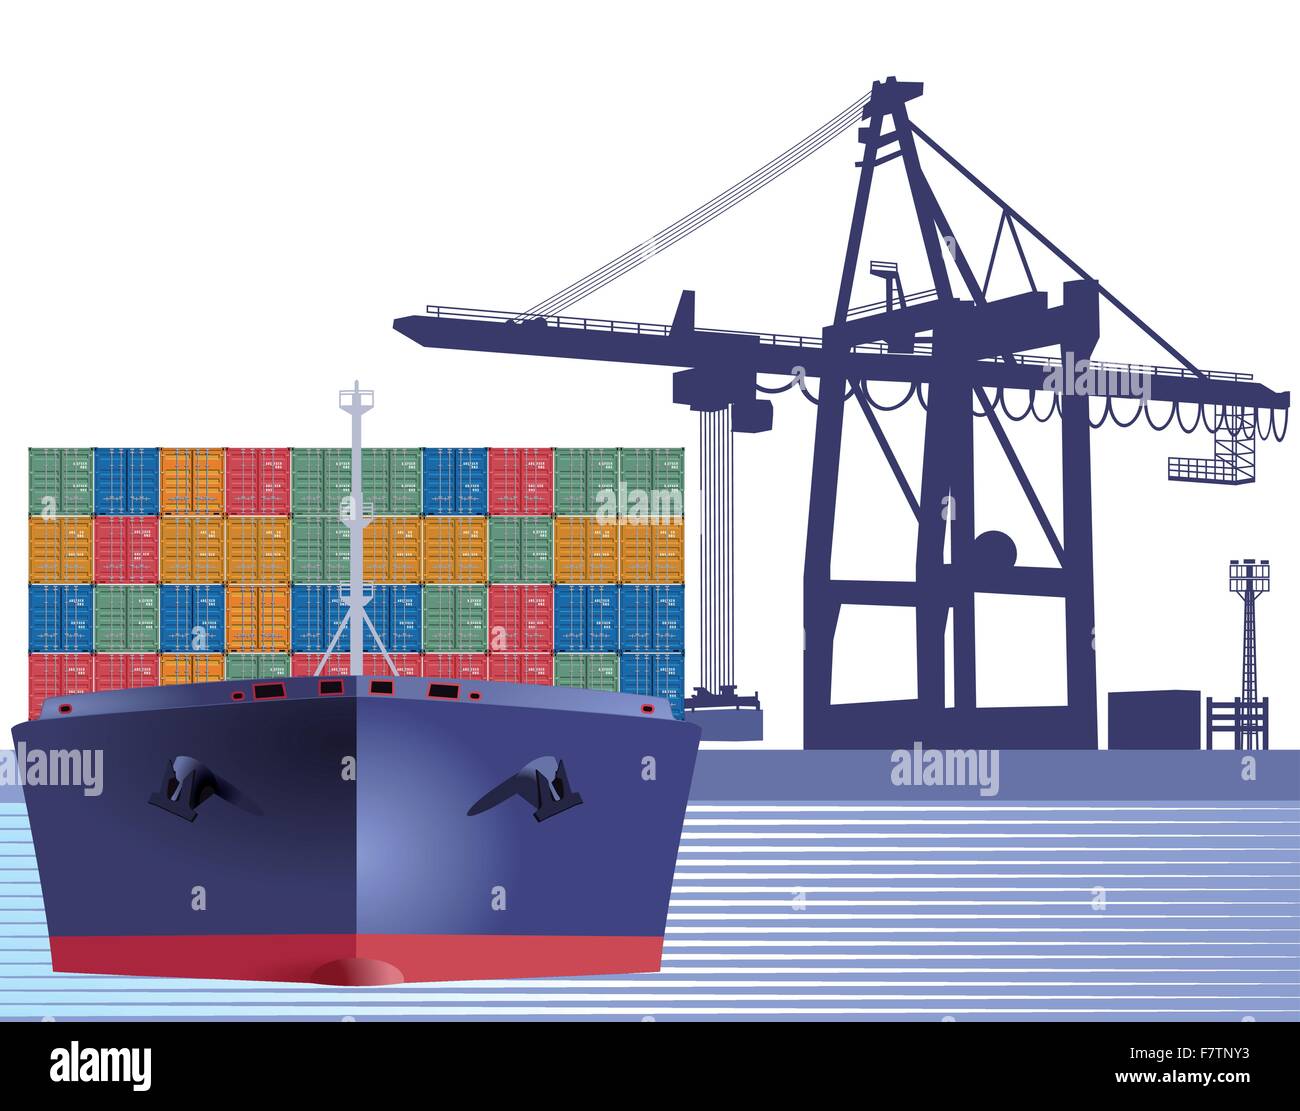 Schiff mit Containern Stock Vektor